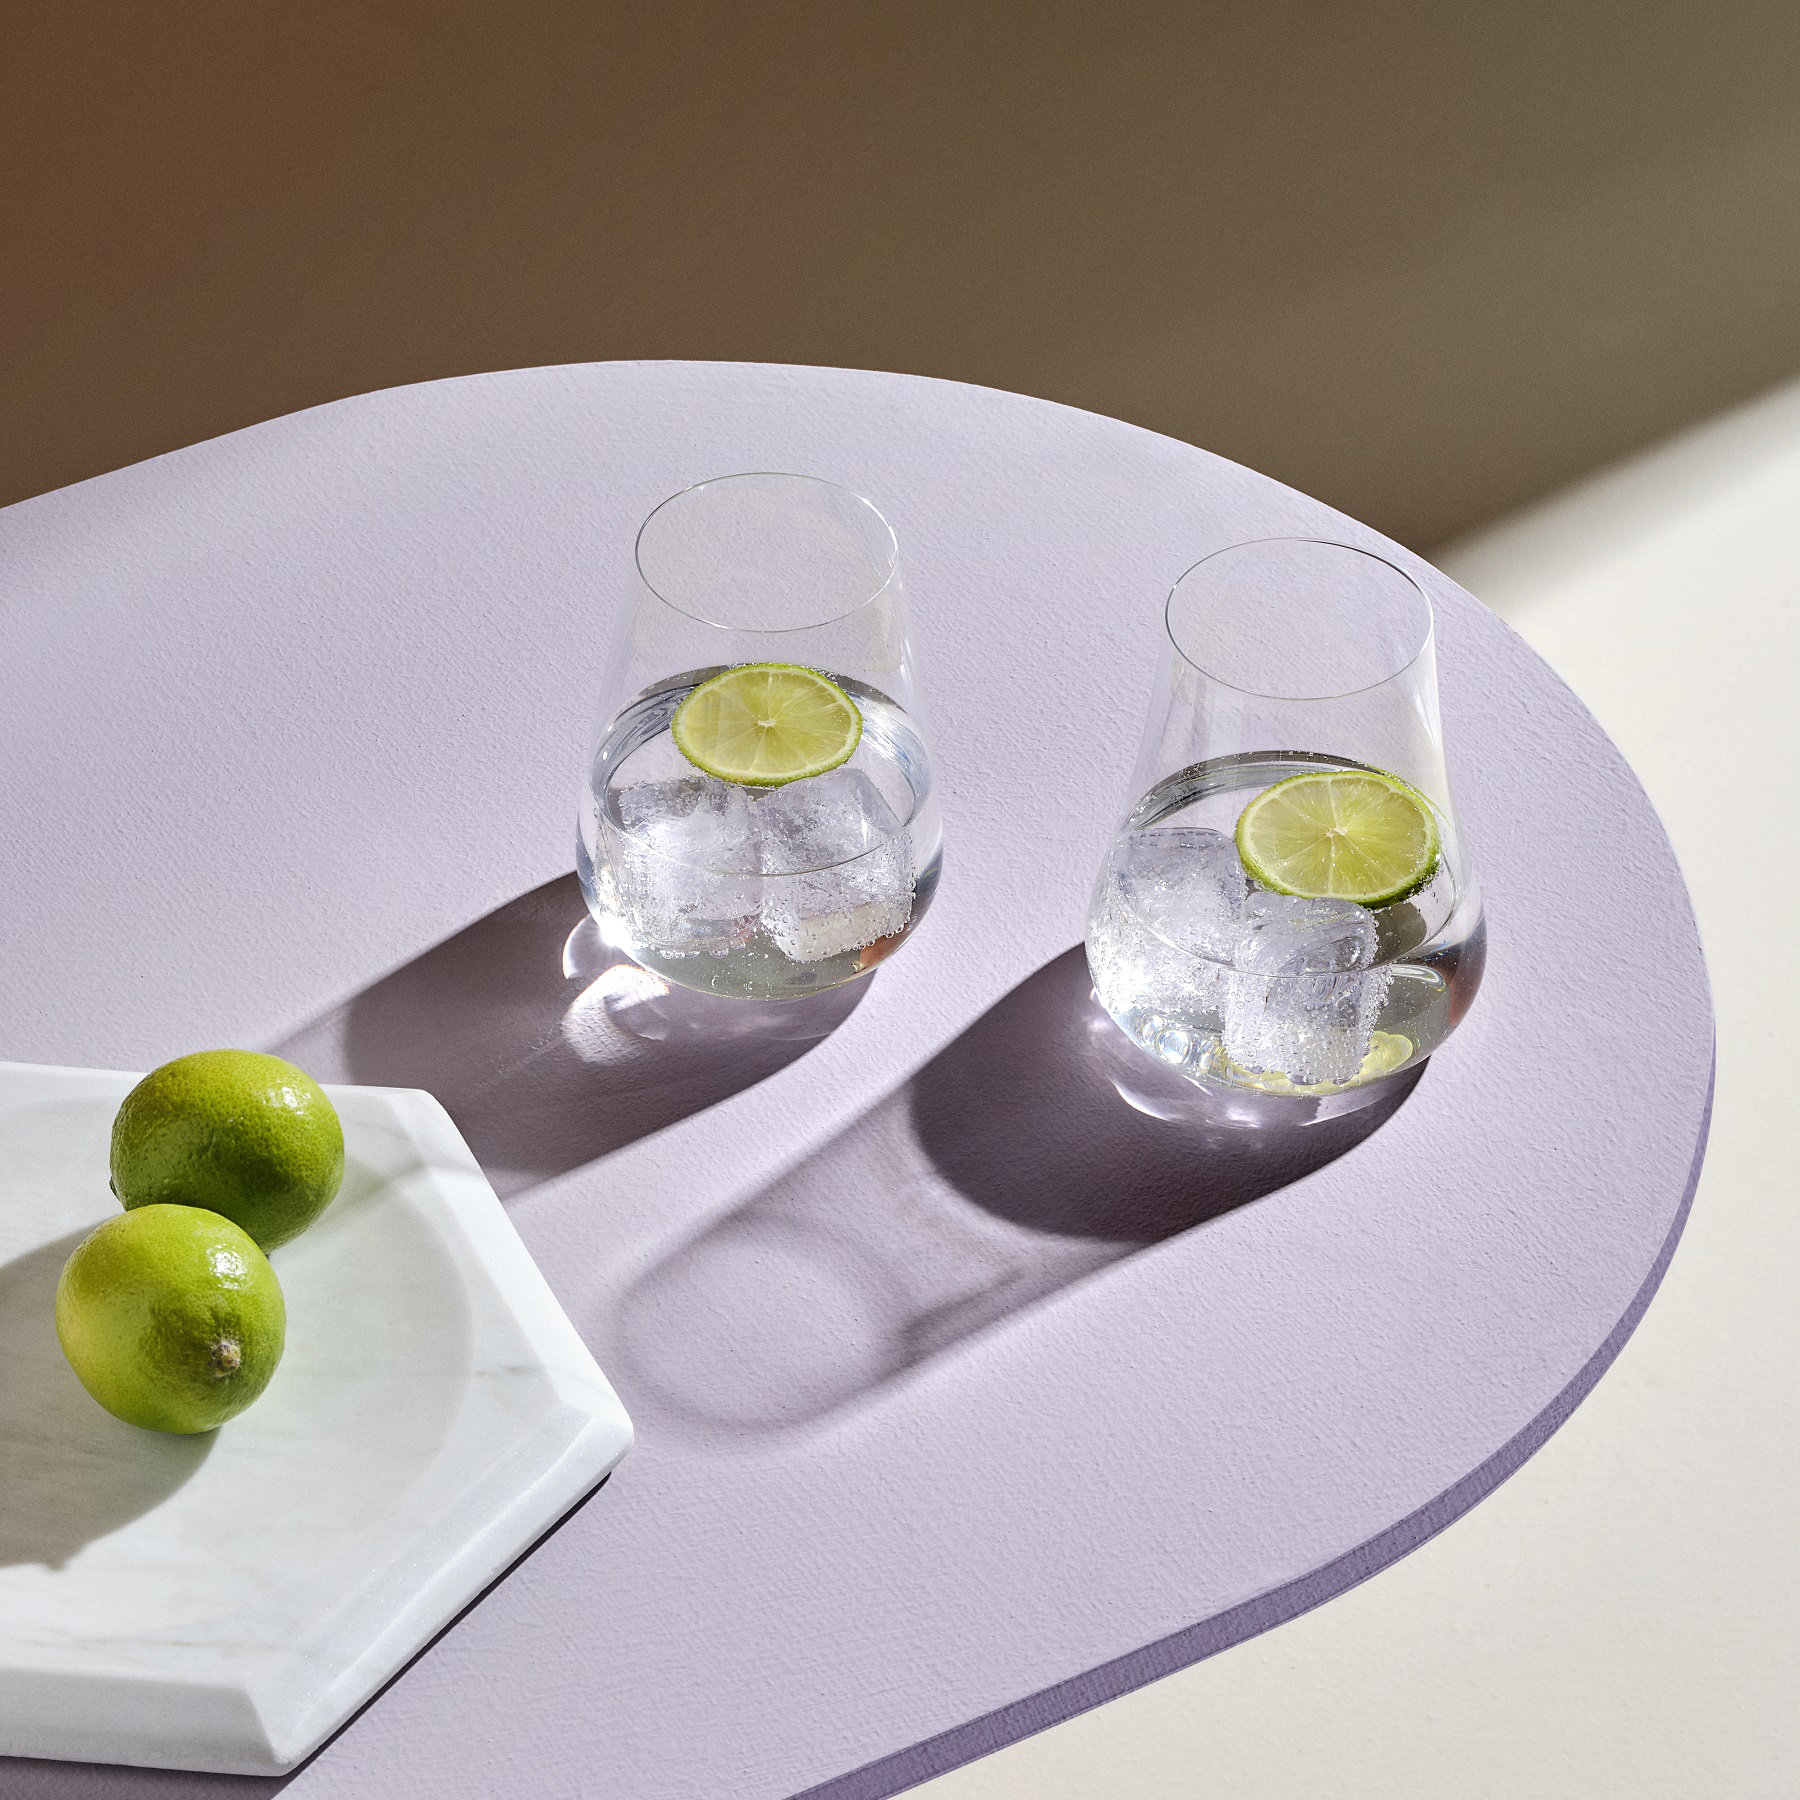 Basics Chelsea Martini Glass Set, 10-Ounce, Set of 6, Clear